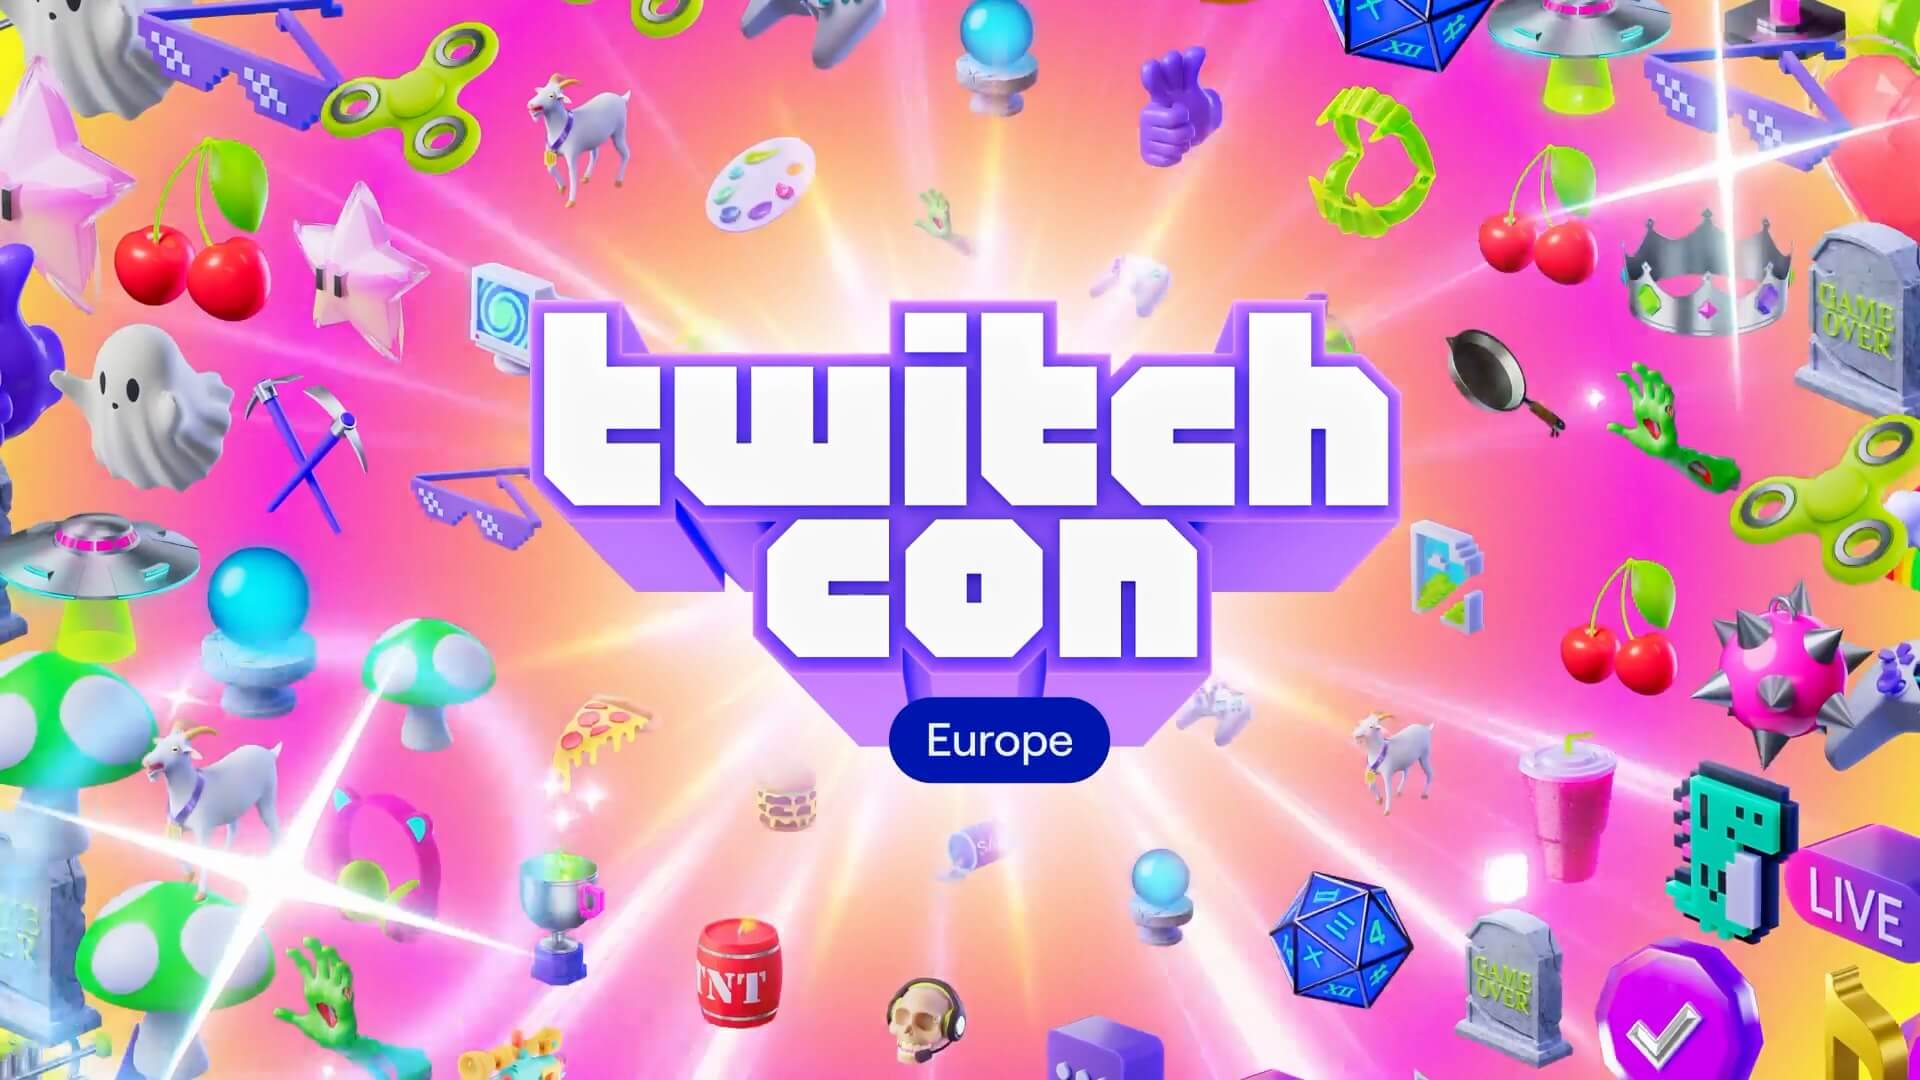 TwitchCon Europe Banner Image